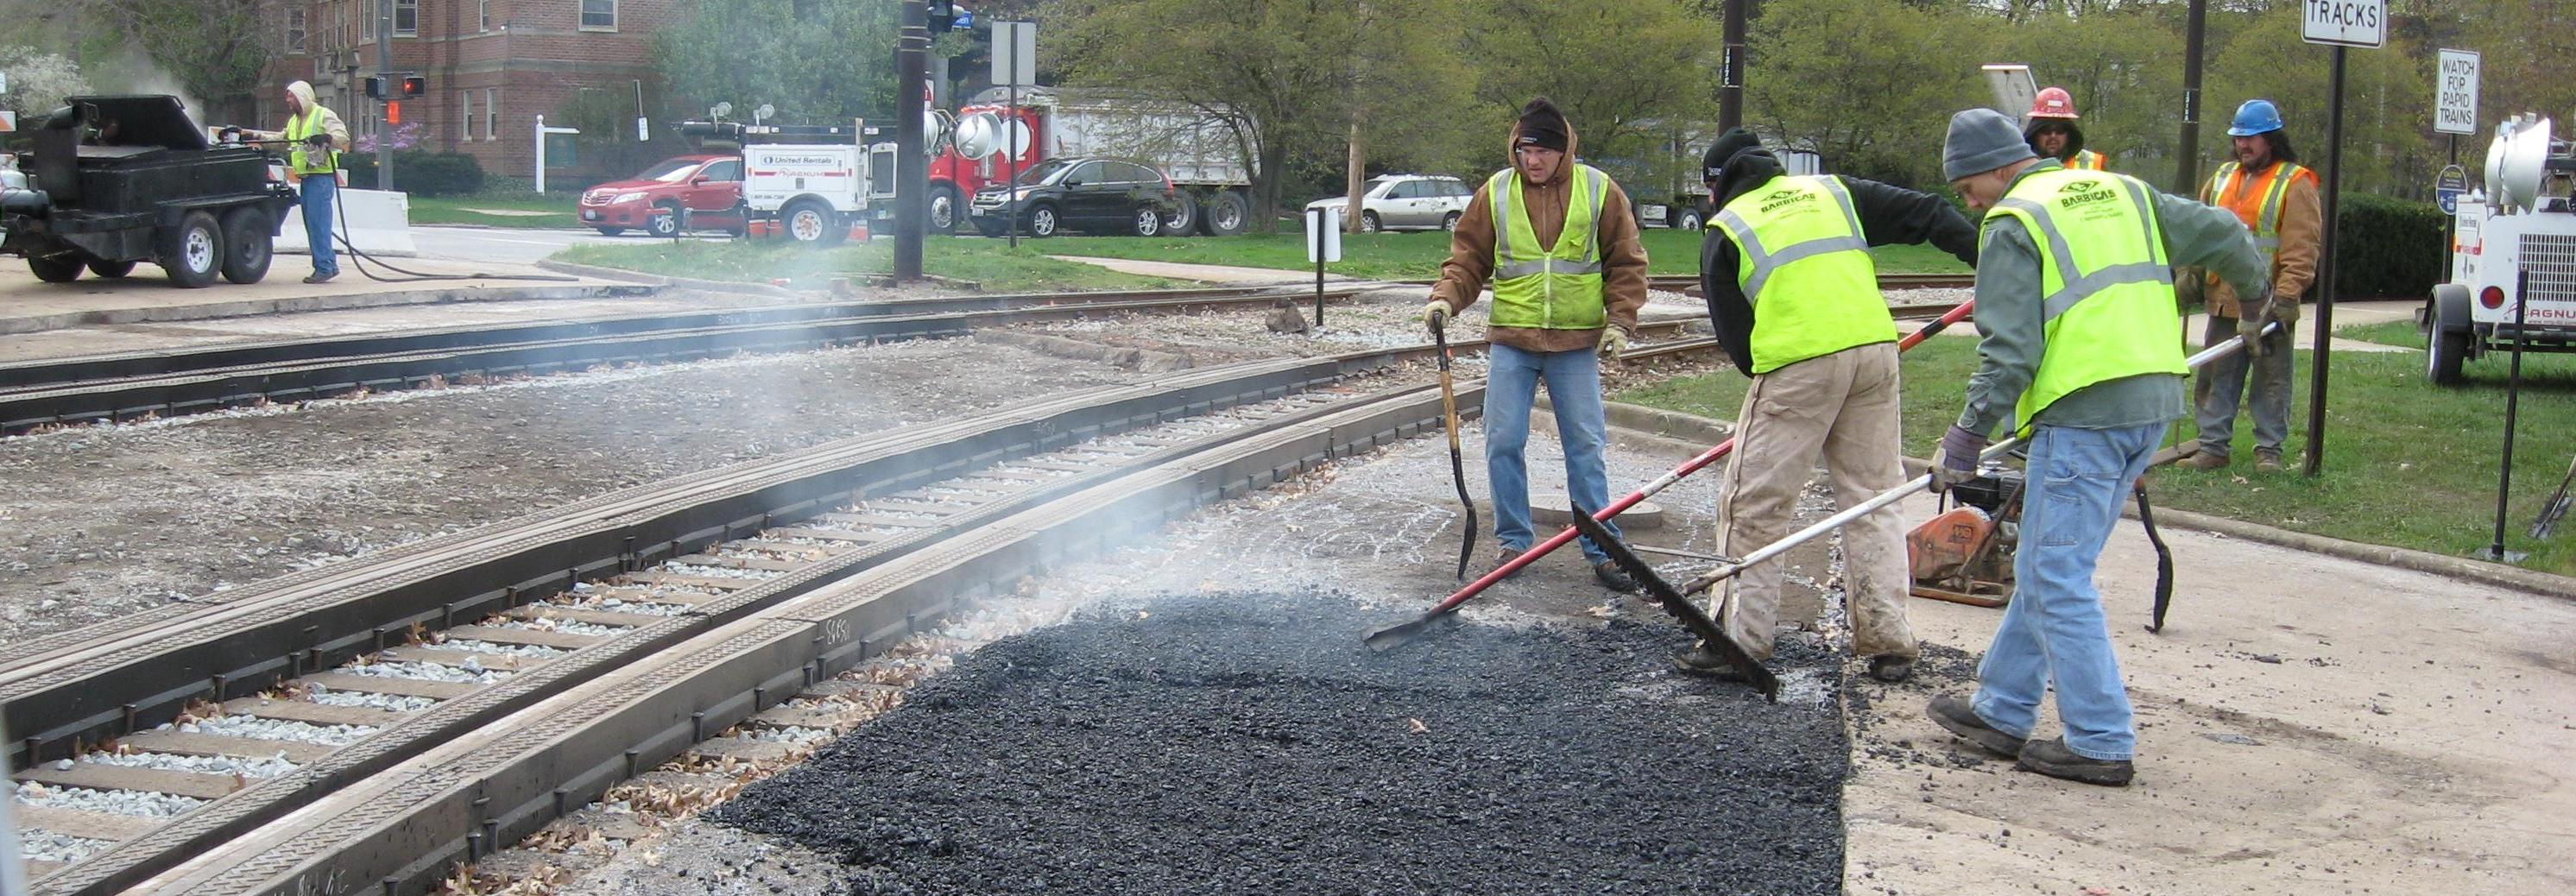  April 19-21: Grade crossing work shuts down Green Line Rapid